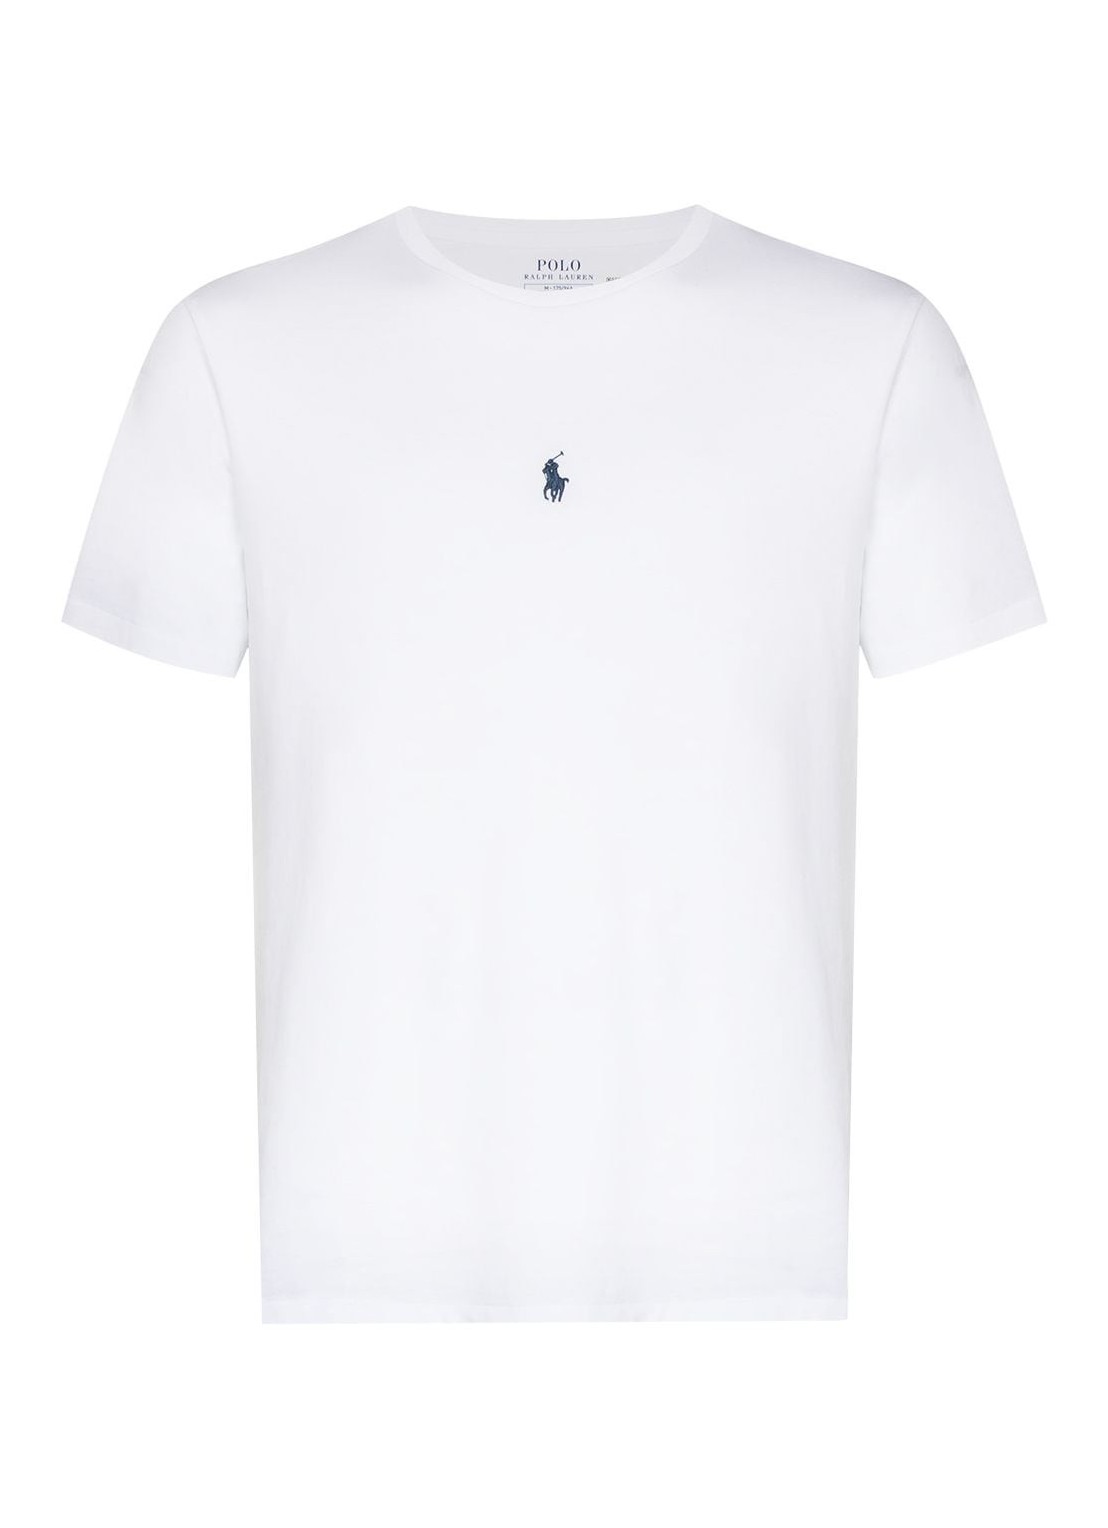 Camiseta polo ralph lauren t-shirt man knit shirts 710839046002 white talla blanco
 